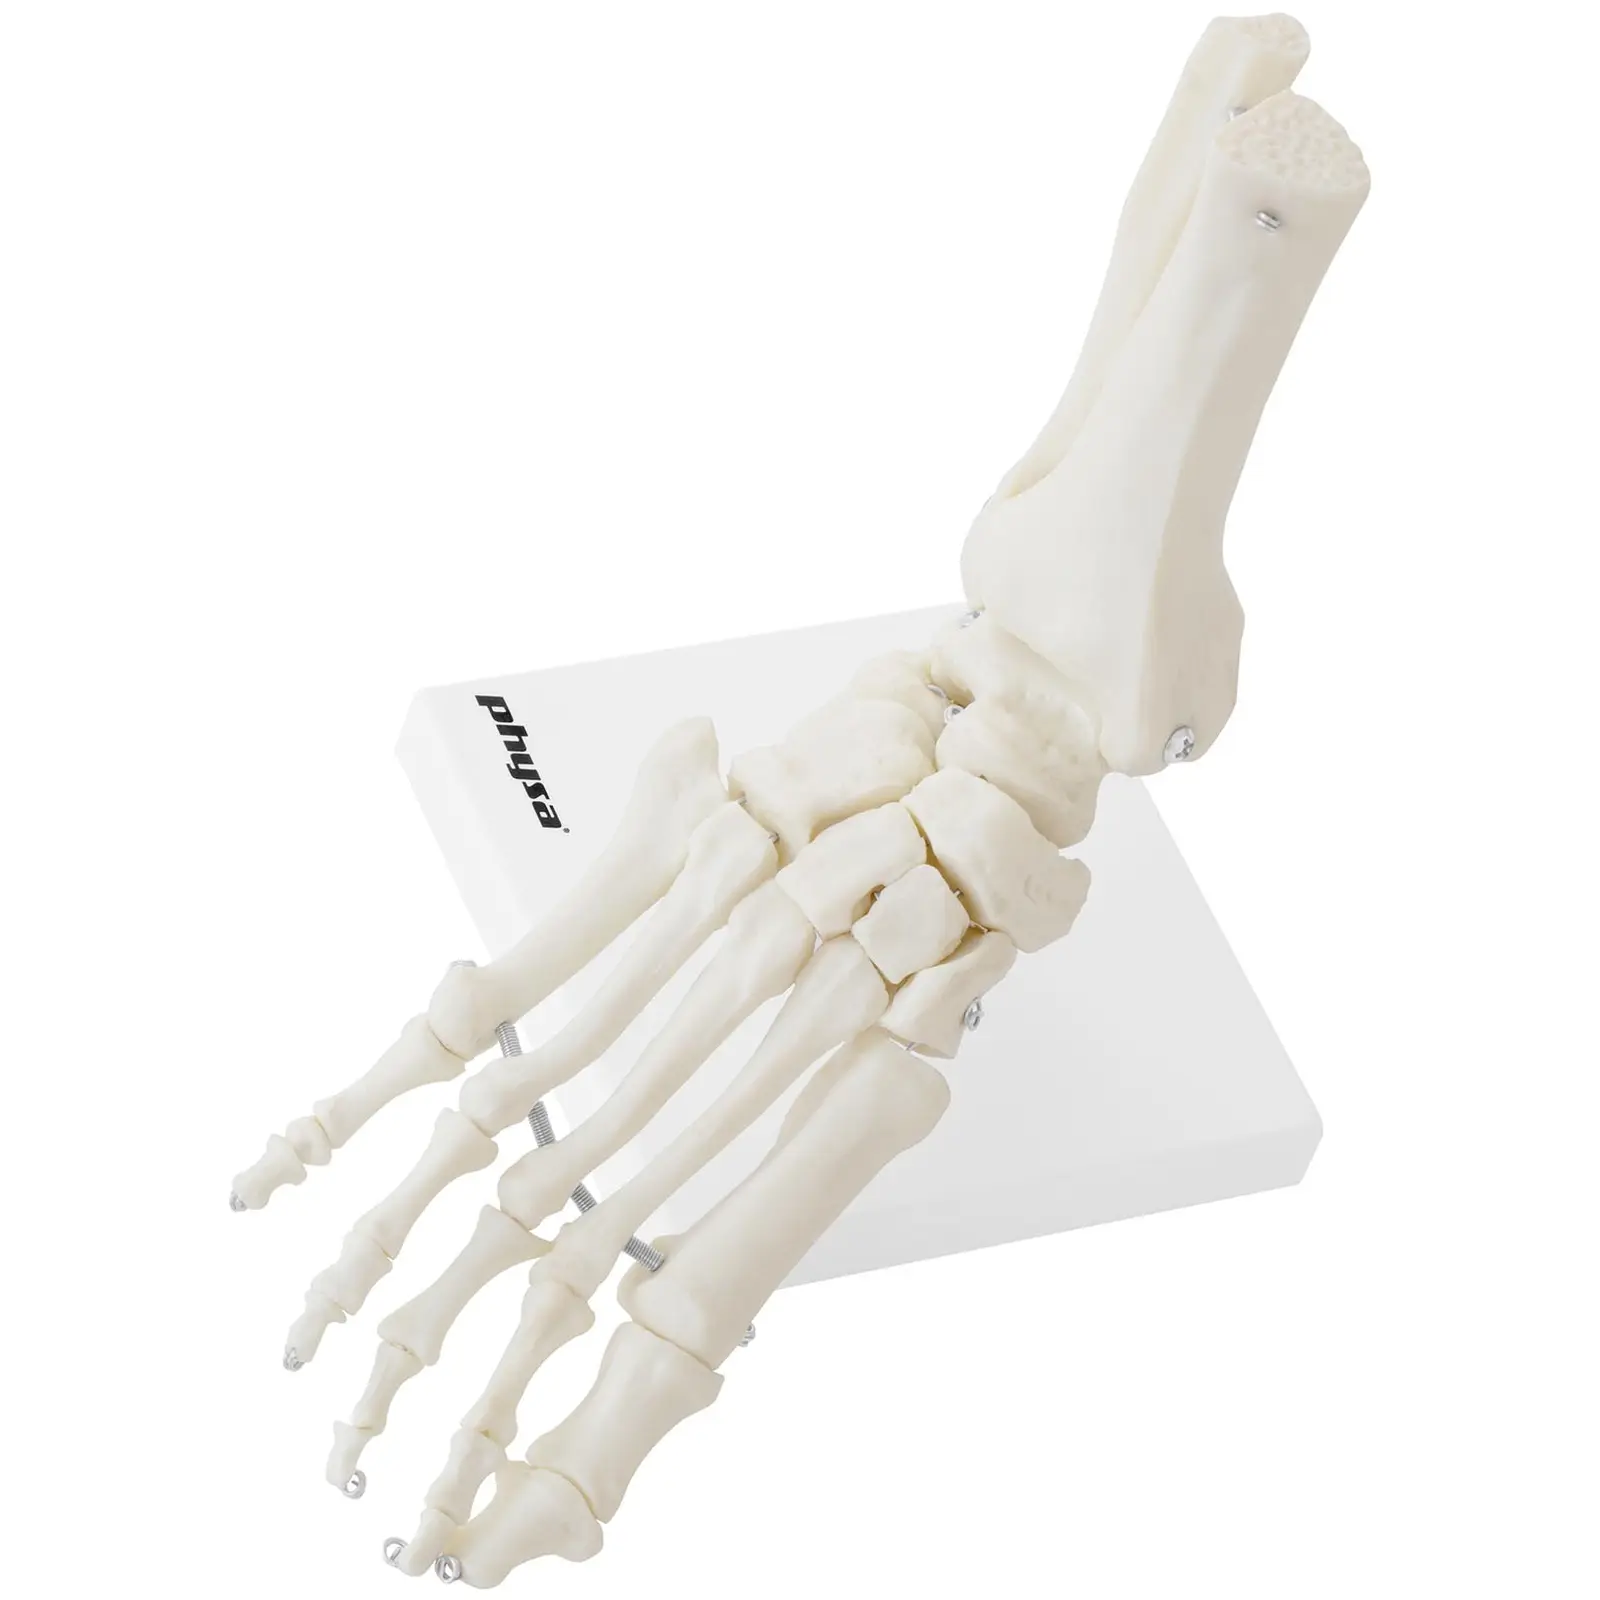 Foot Skeleton Model